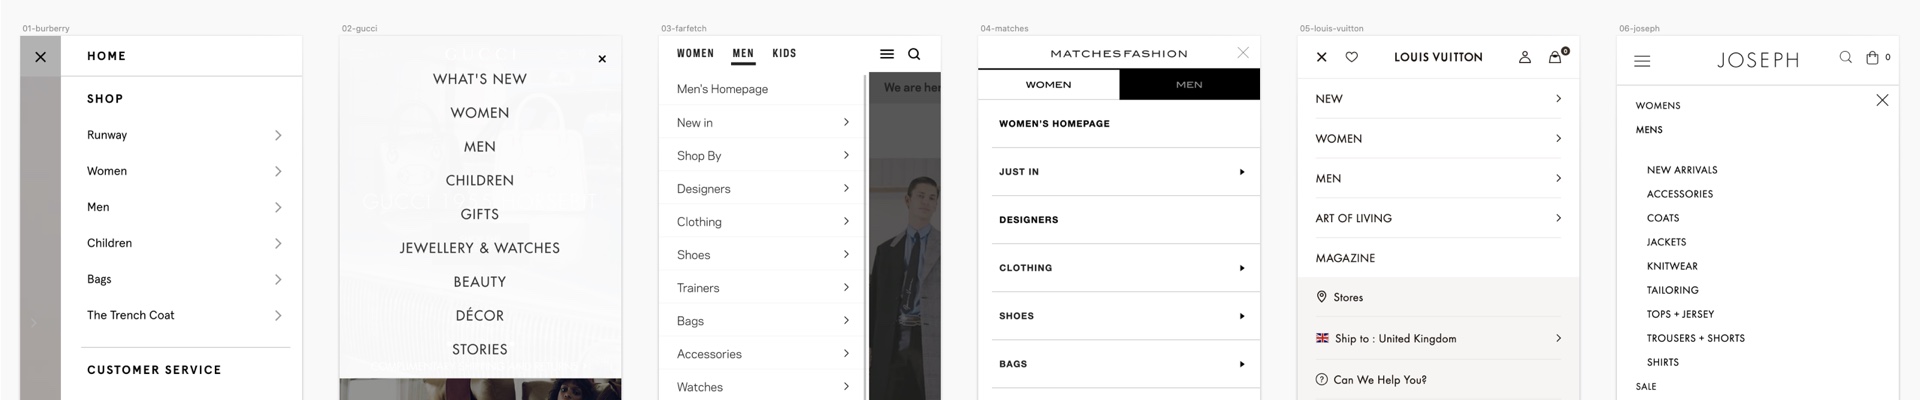 Screen shot of competitors mobile website navigation